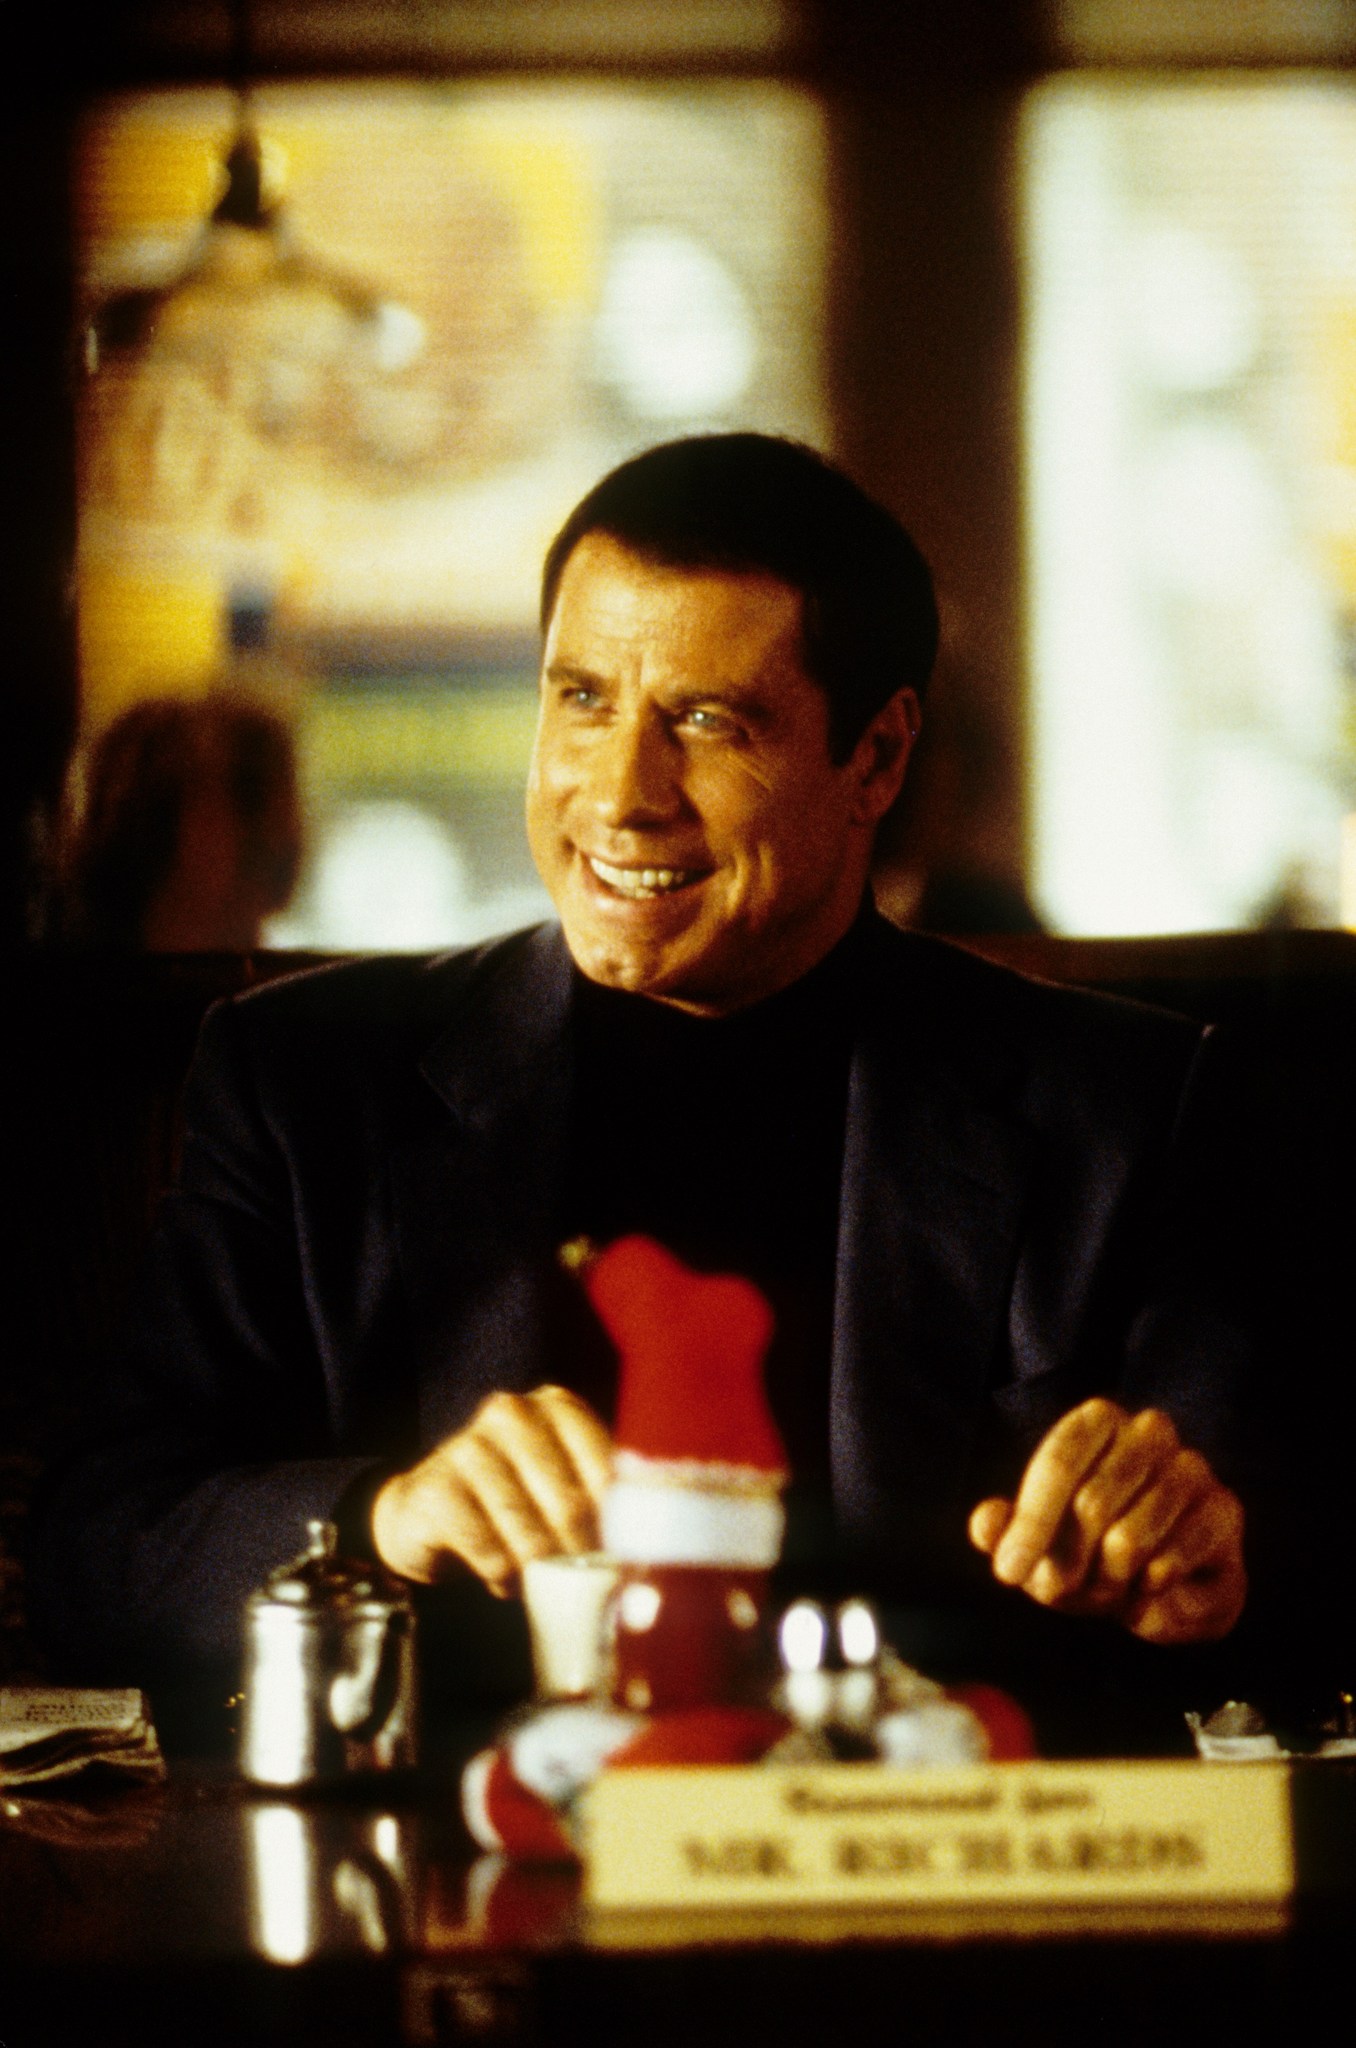 Still of John Travolta in Lucky Numbers (2000)